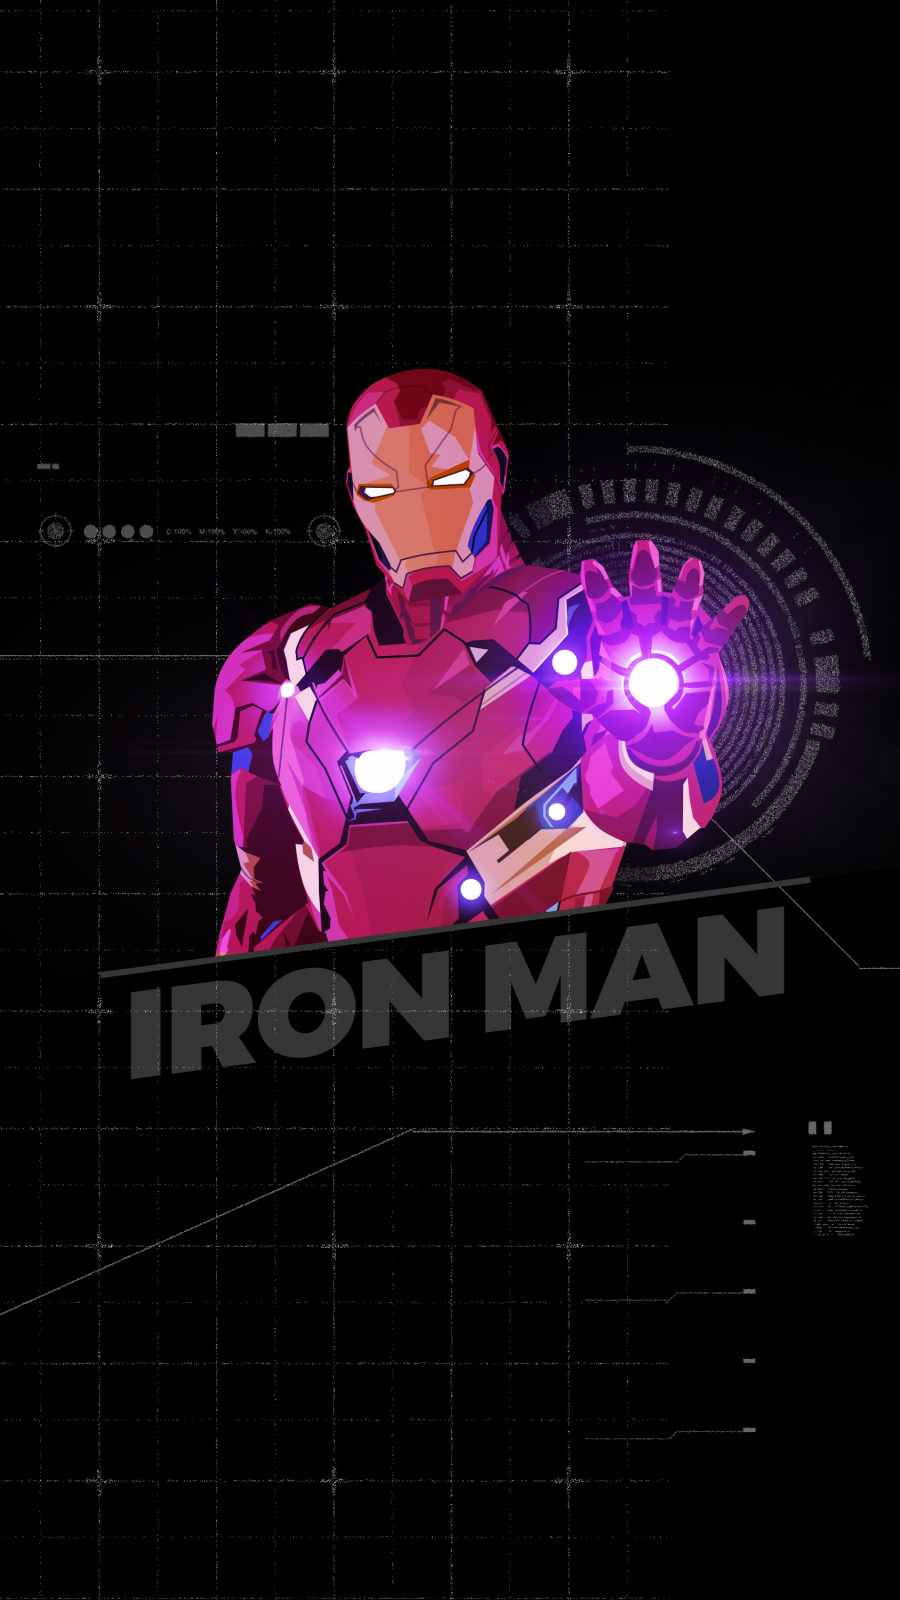 The Iron Man Design iPhone Wallpaper